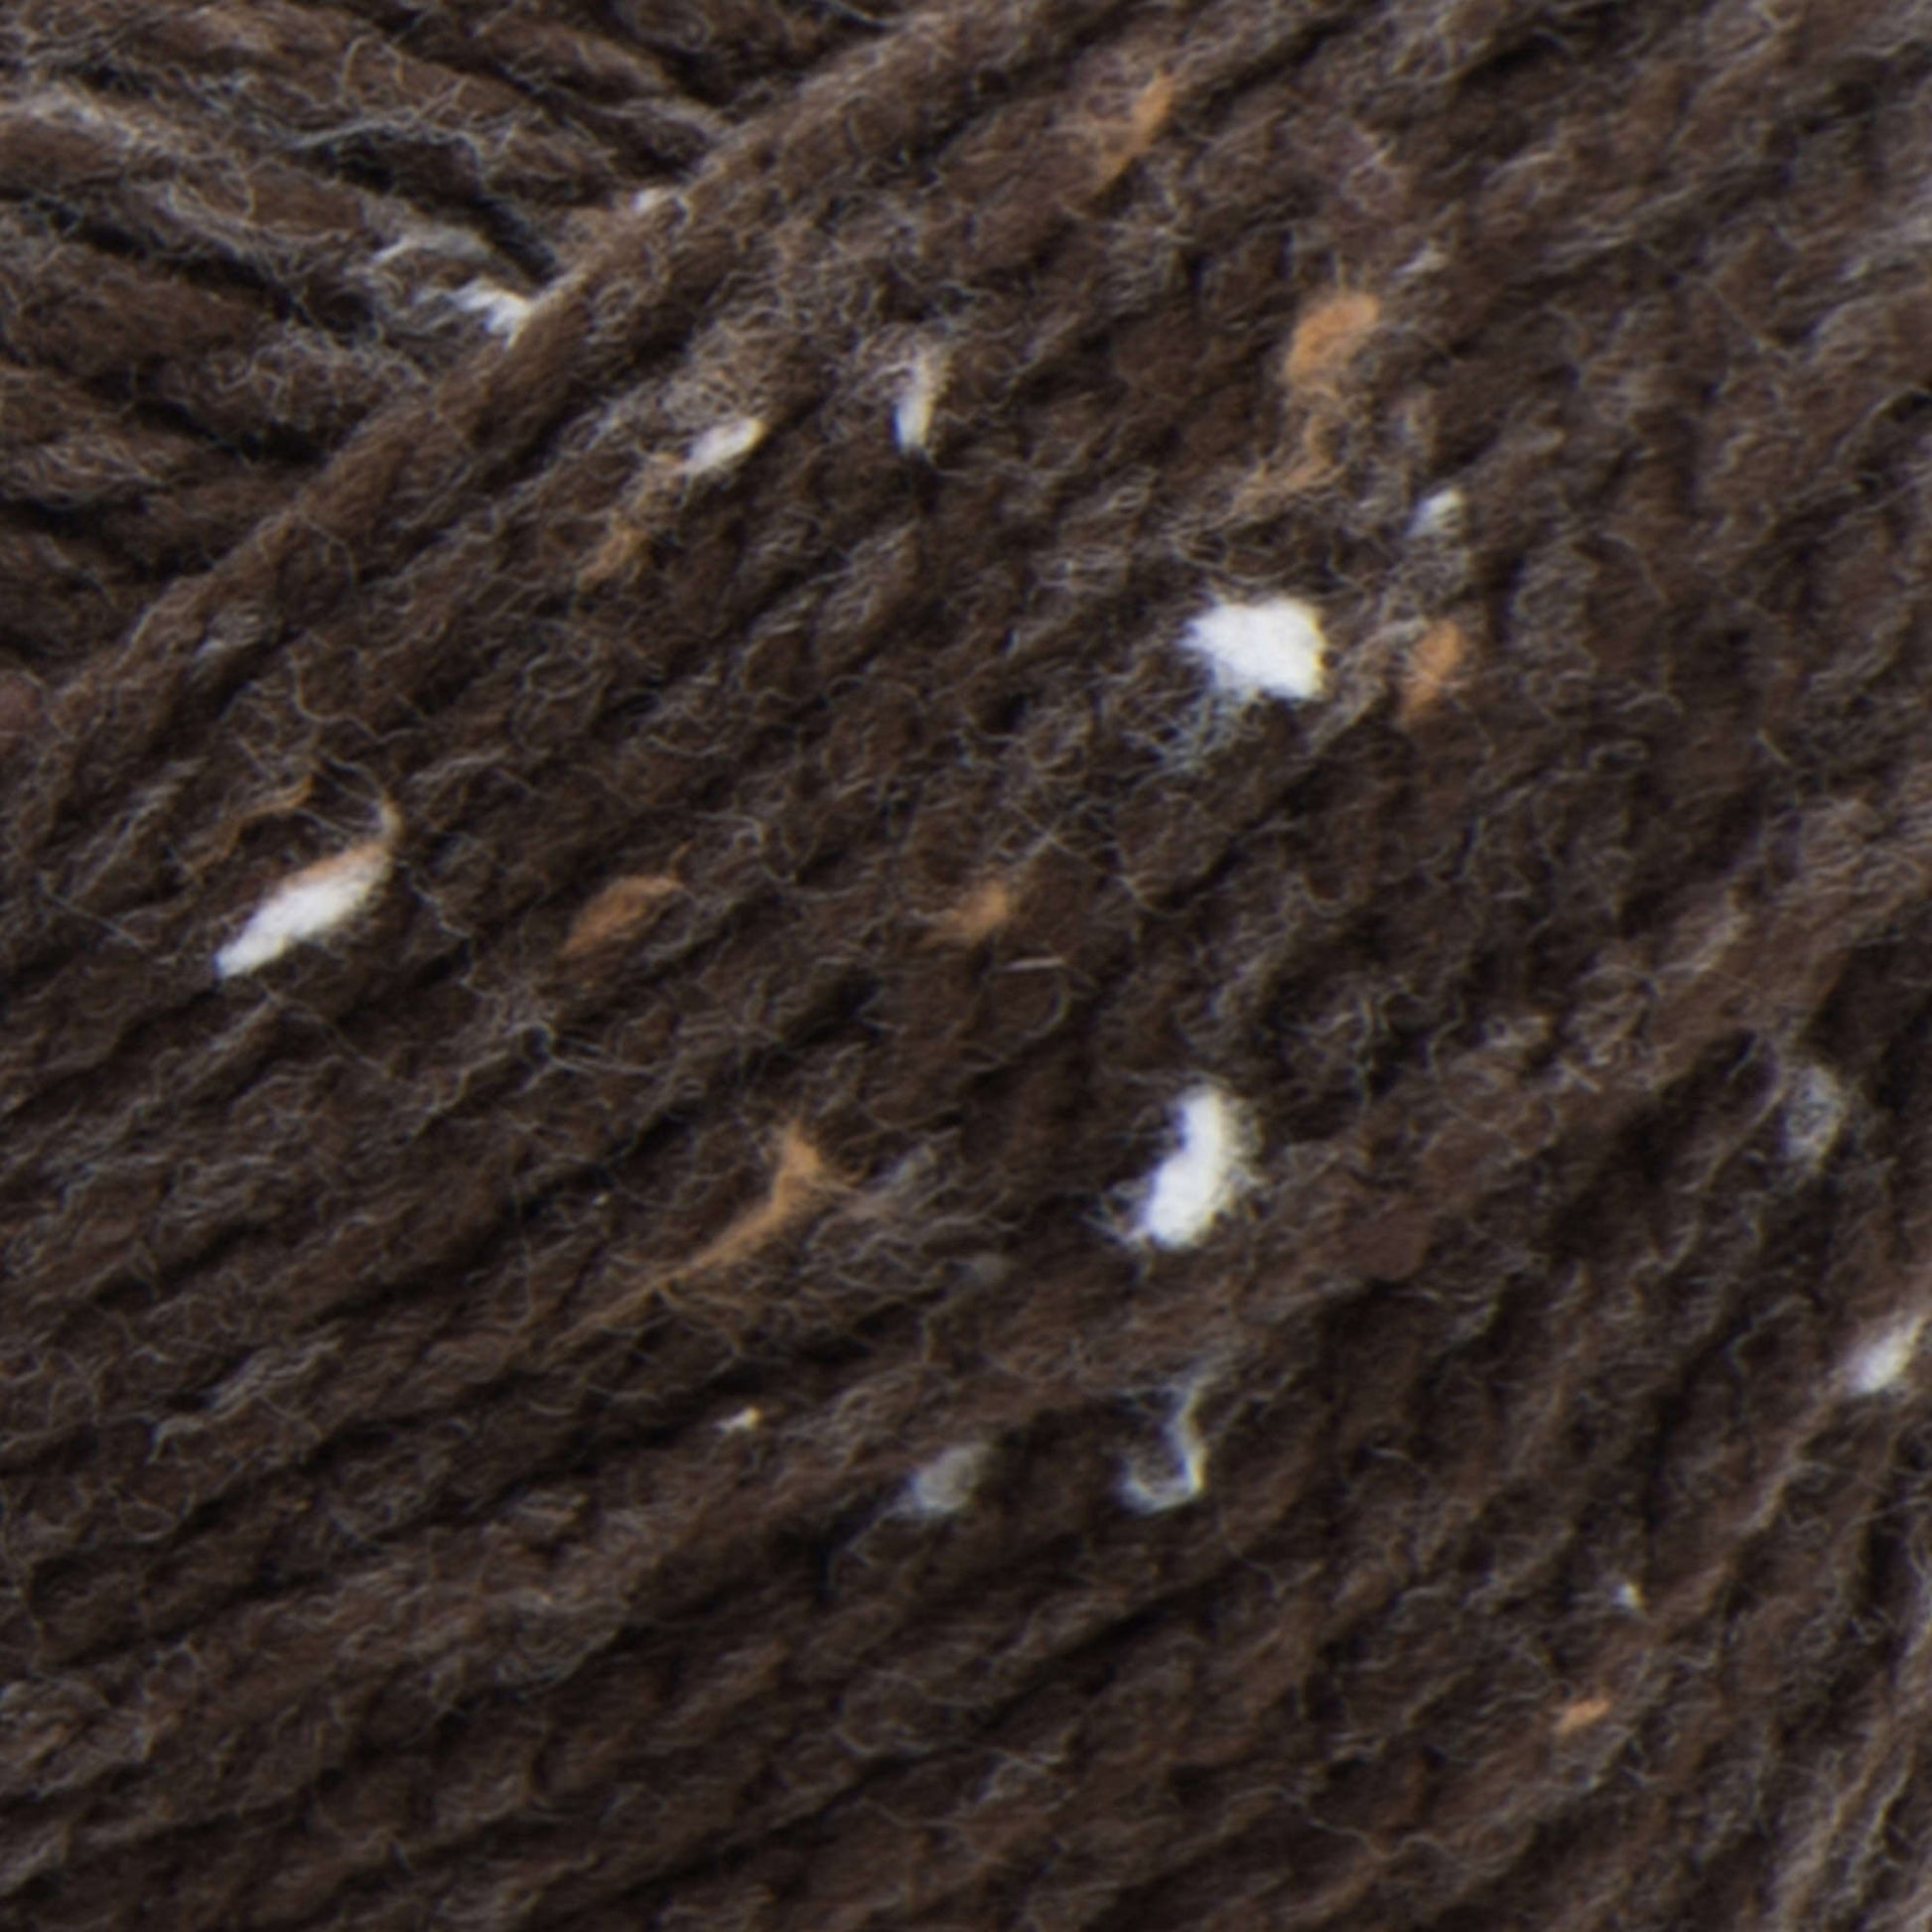 Bernat Softee Chunky Tweeds Yarn (300g/10.5oz) - Discontinued Shades